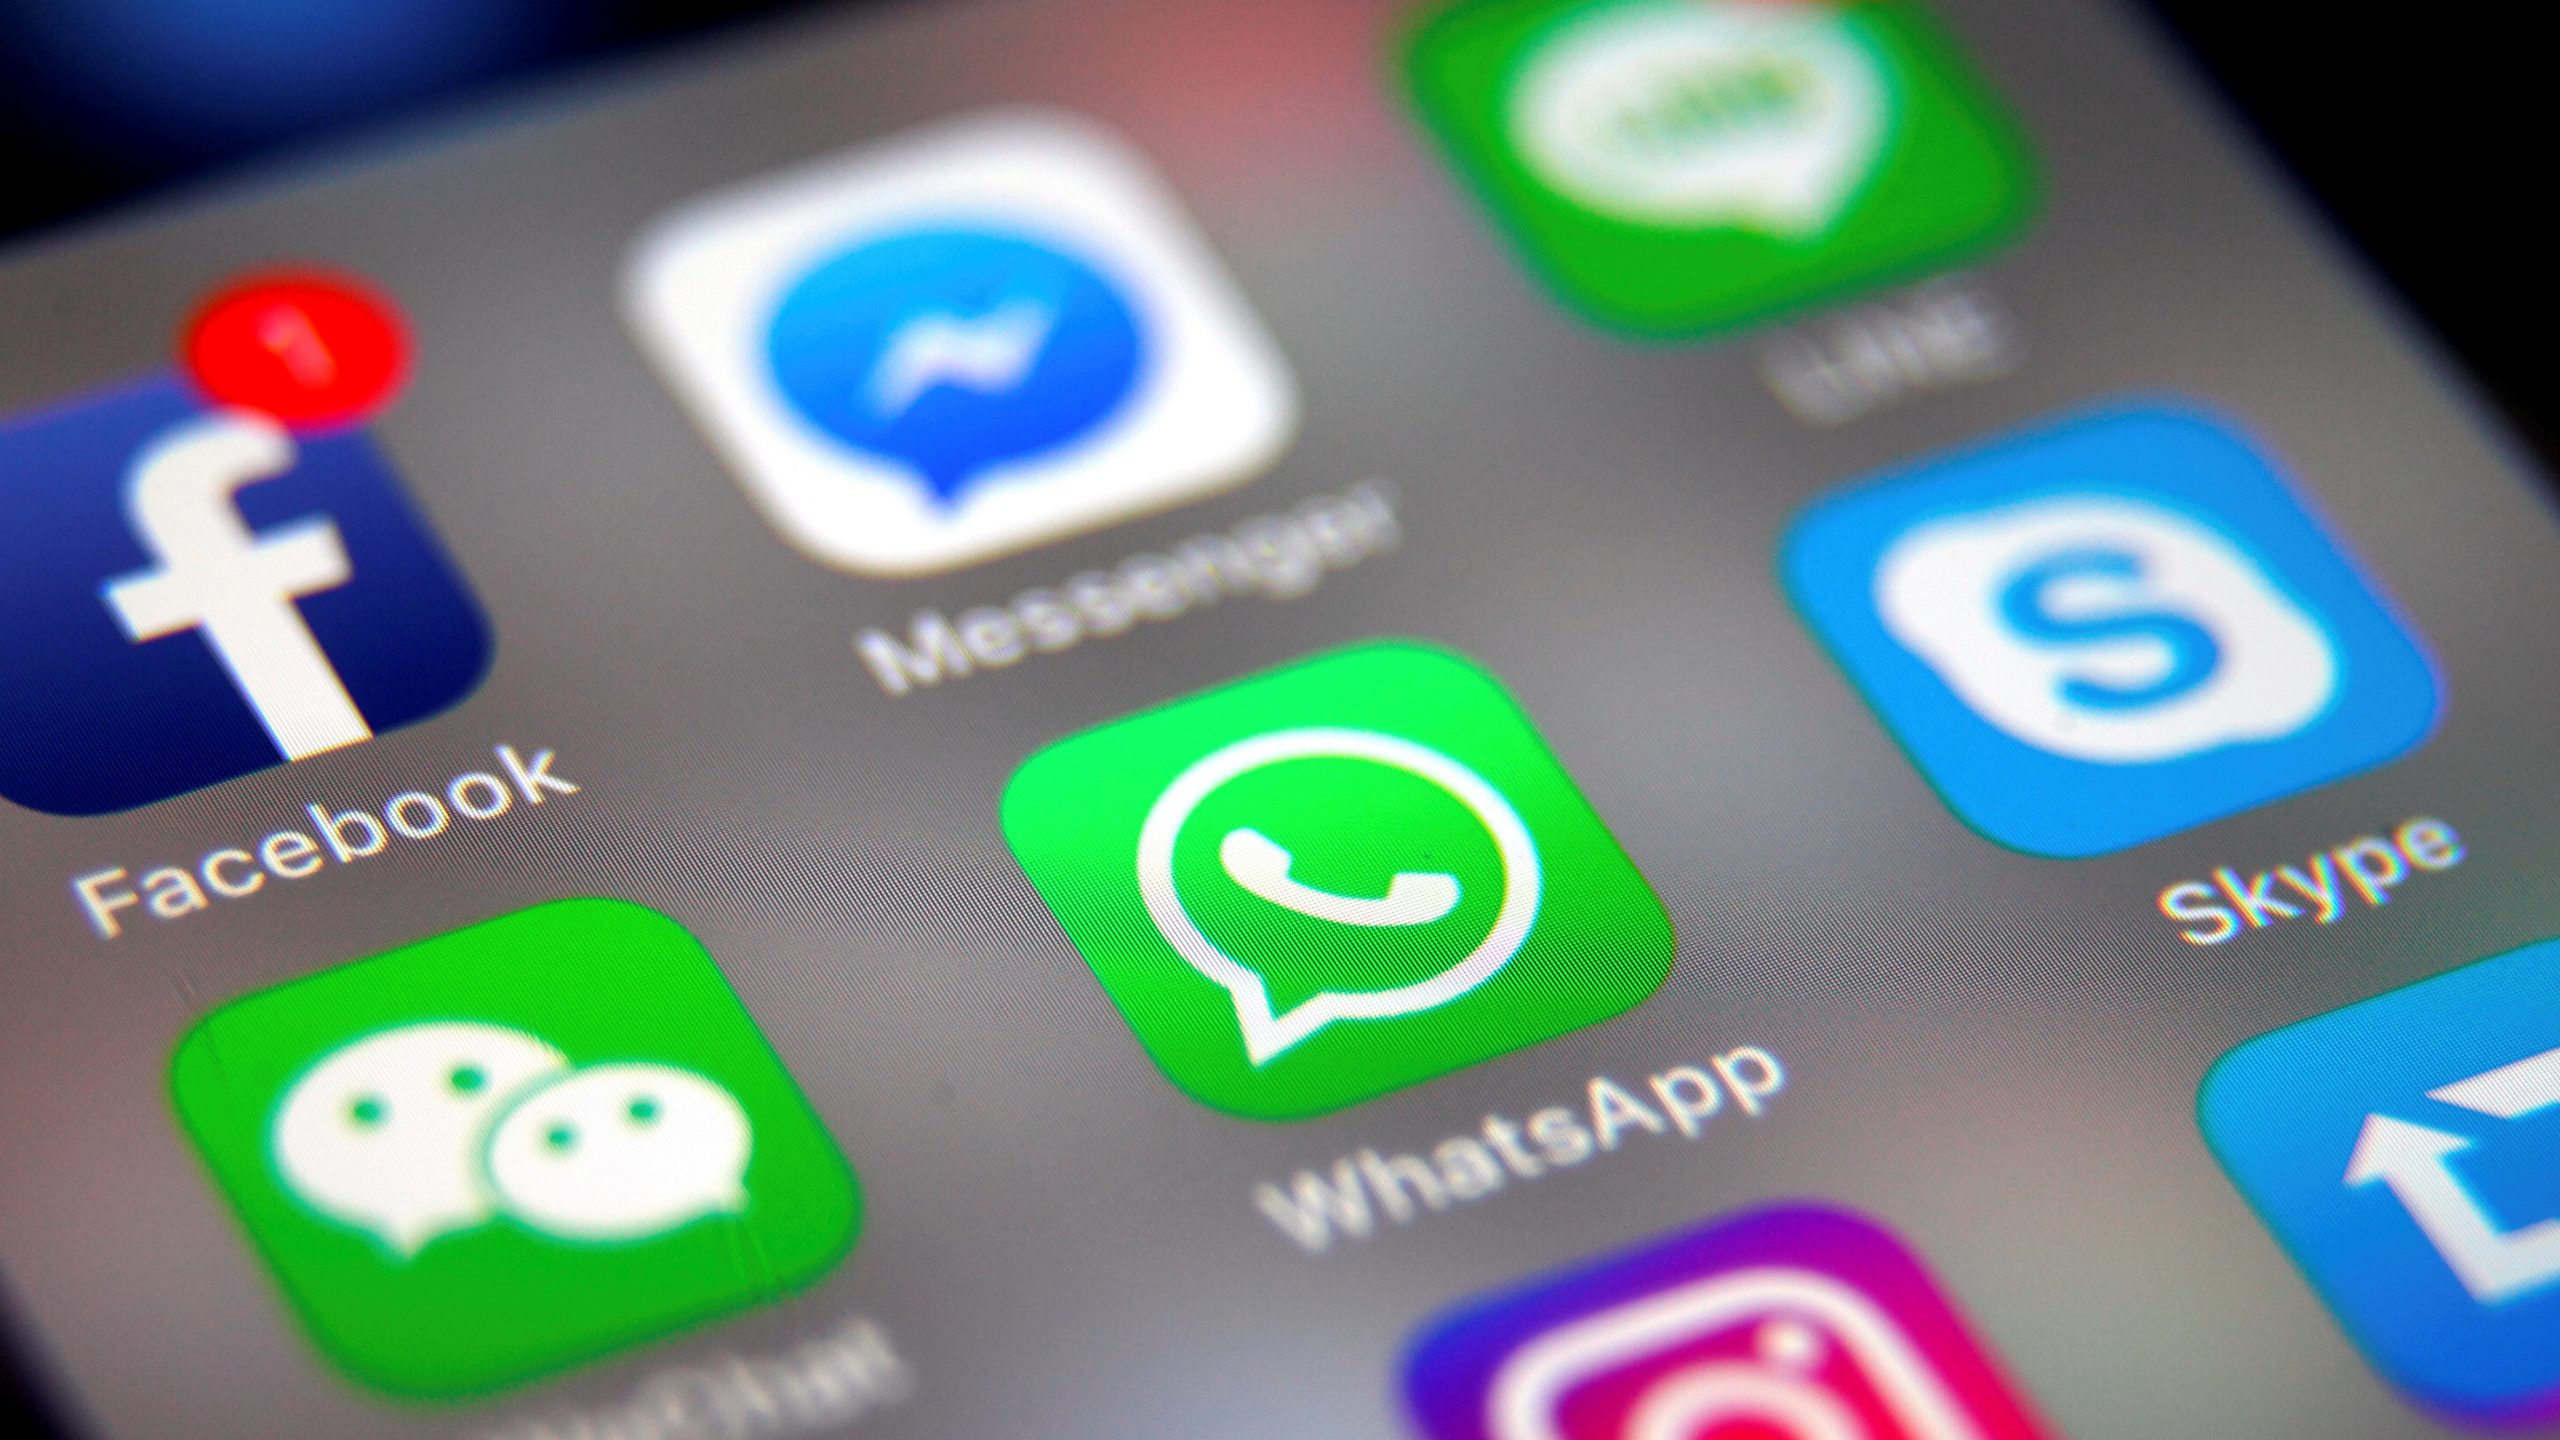 Turkey Investigates Facebook, WhatsApp Over New Privacy Agreement